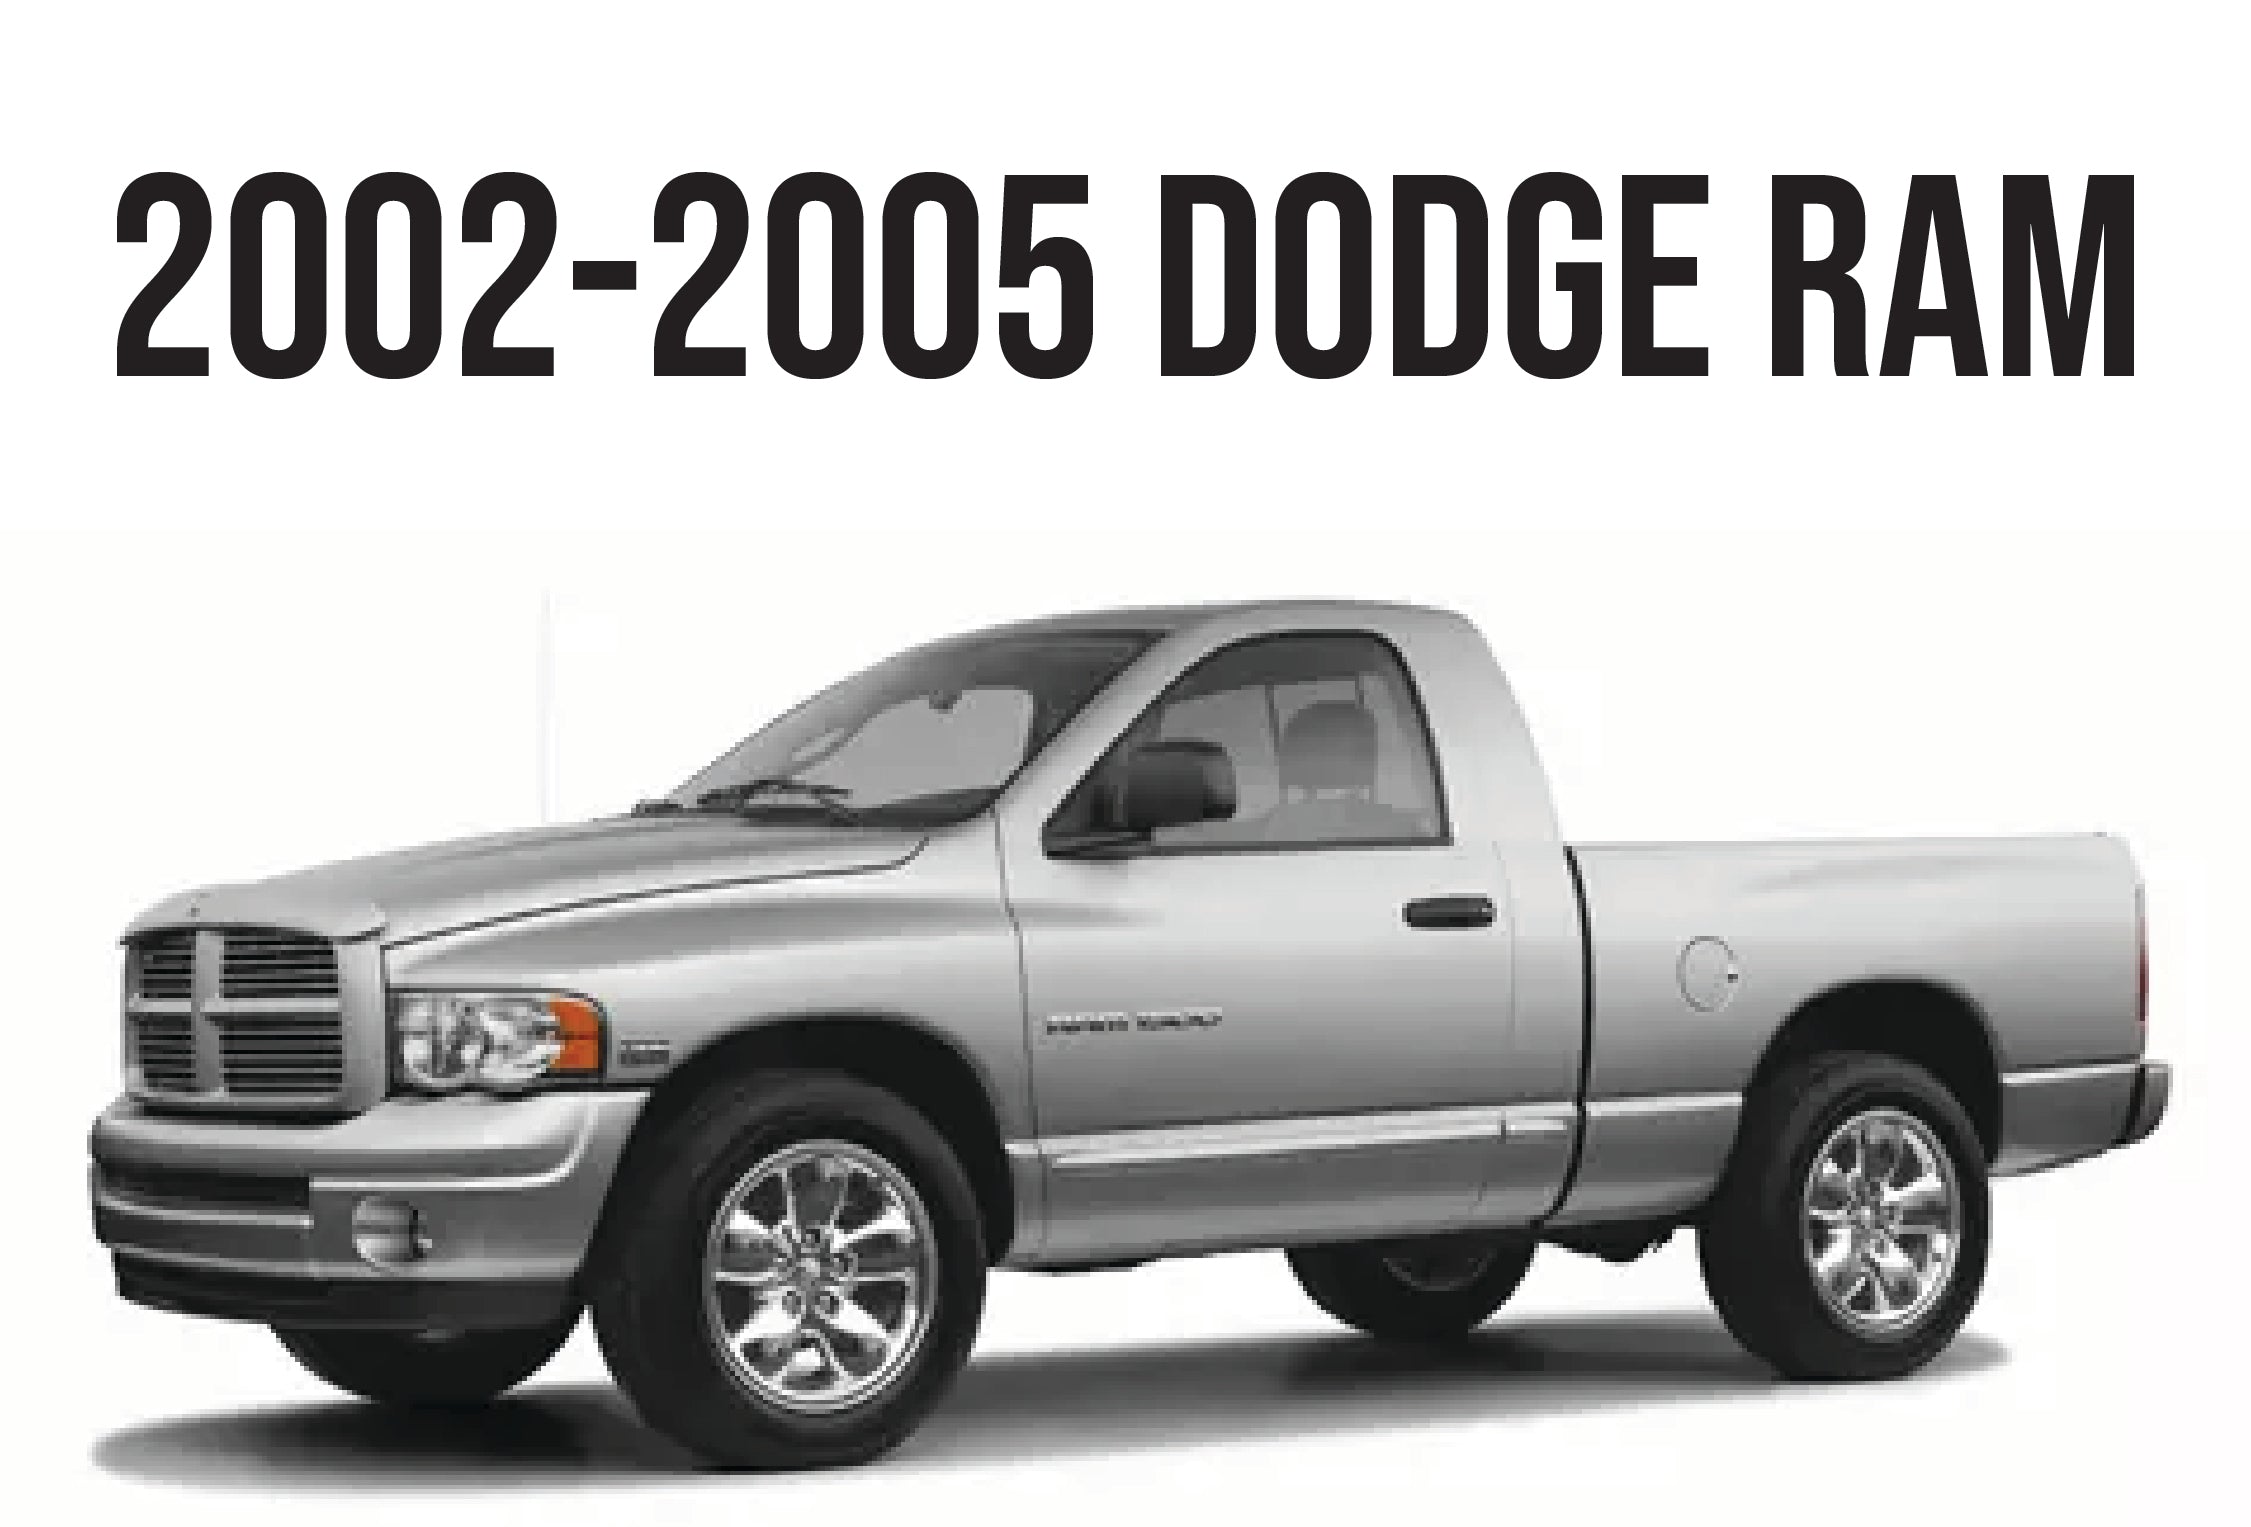 2002-2005 DODGE RAM